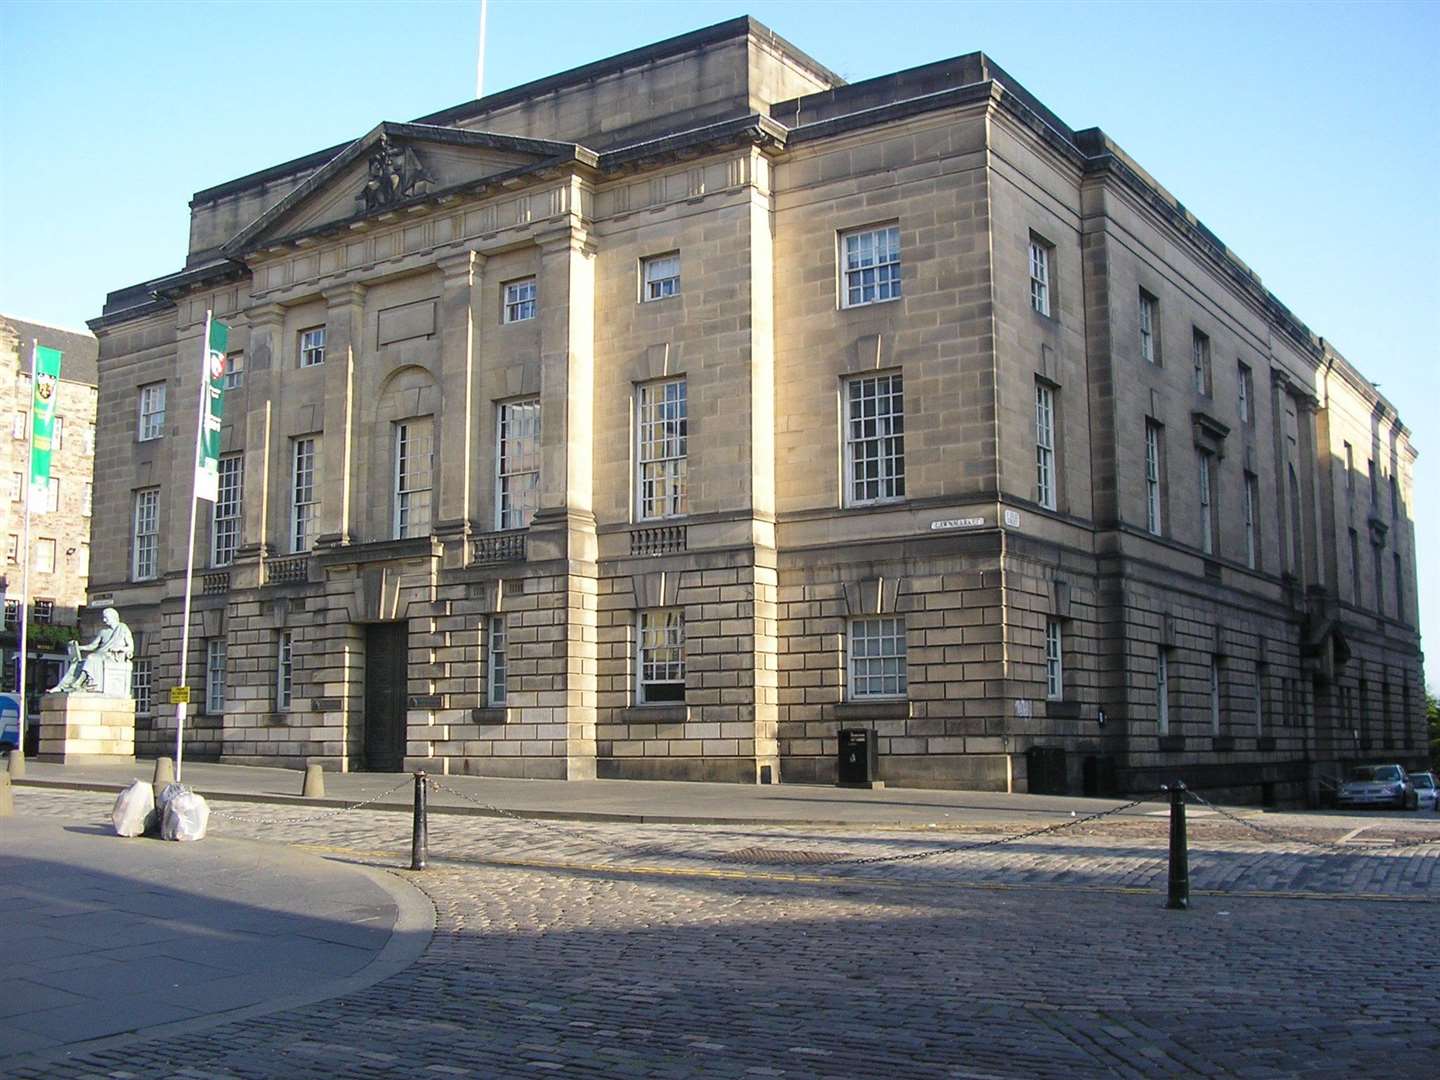 Court of Criminal Appeal in Edinburgh.